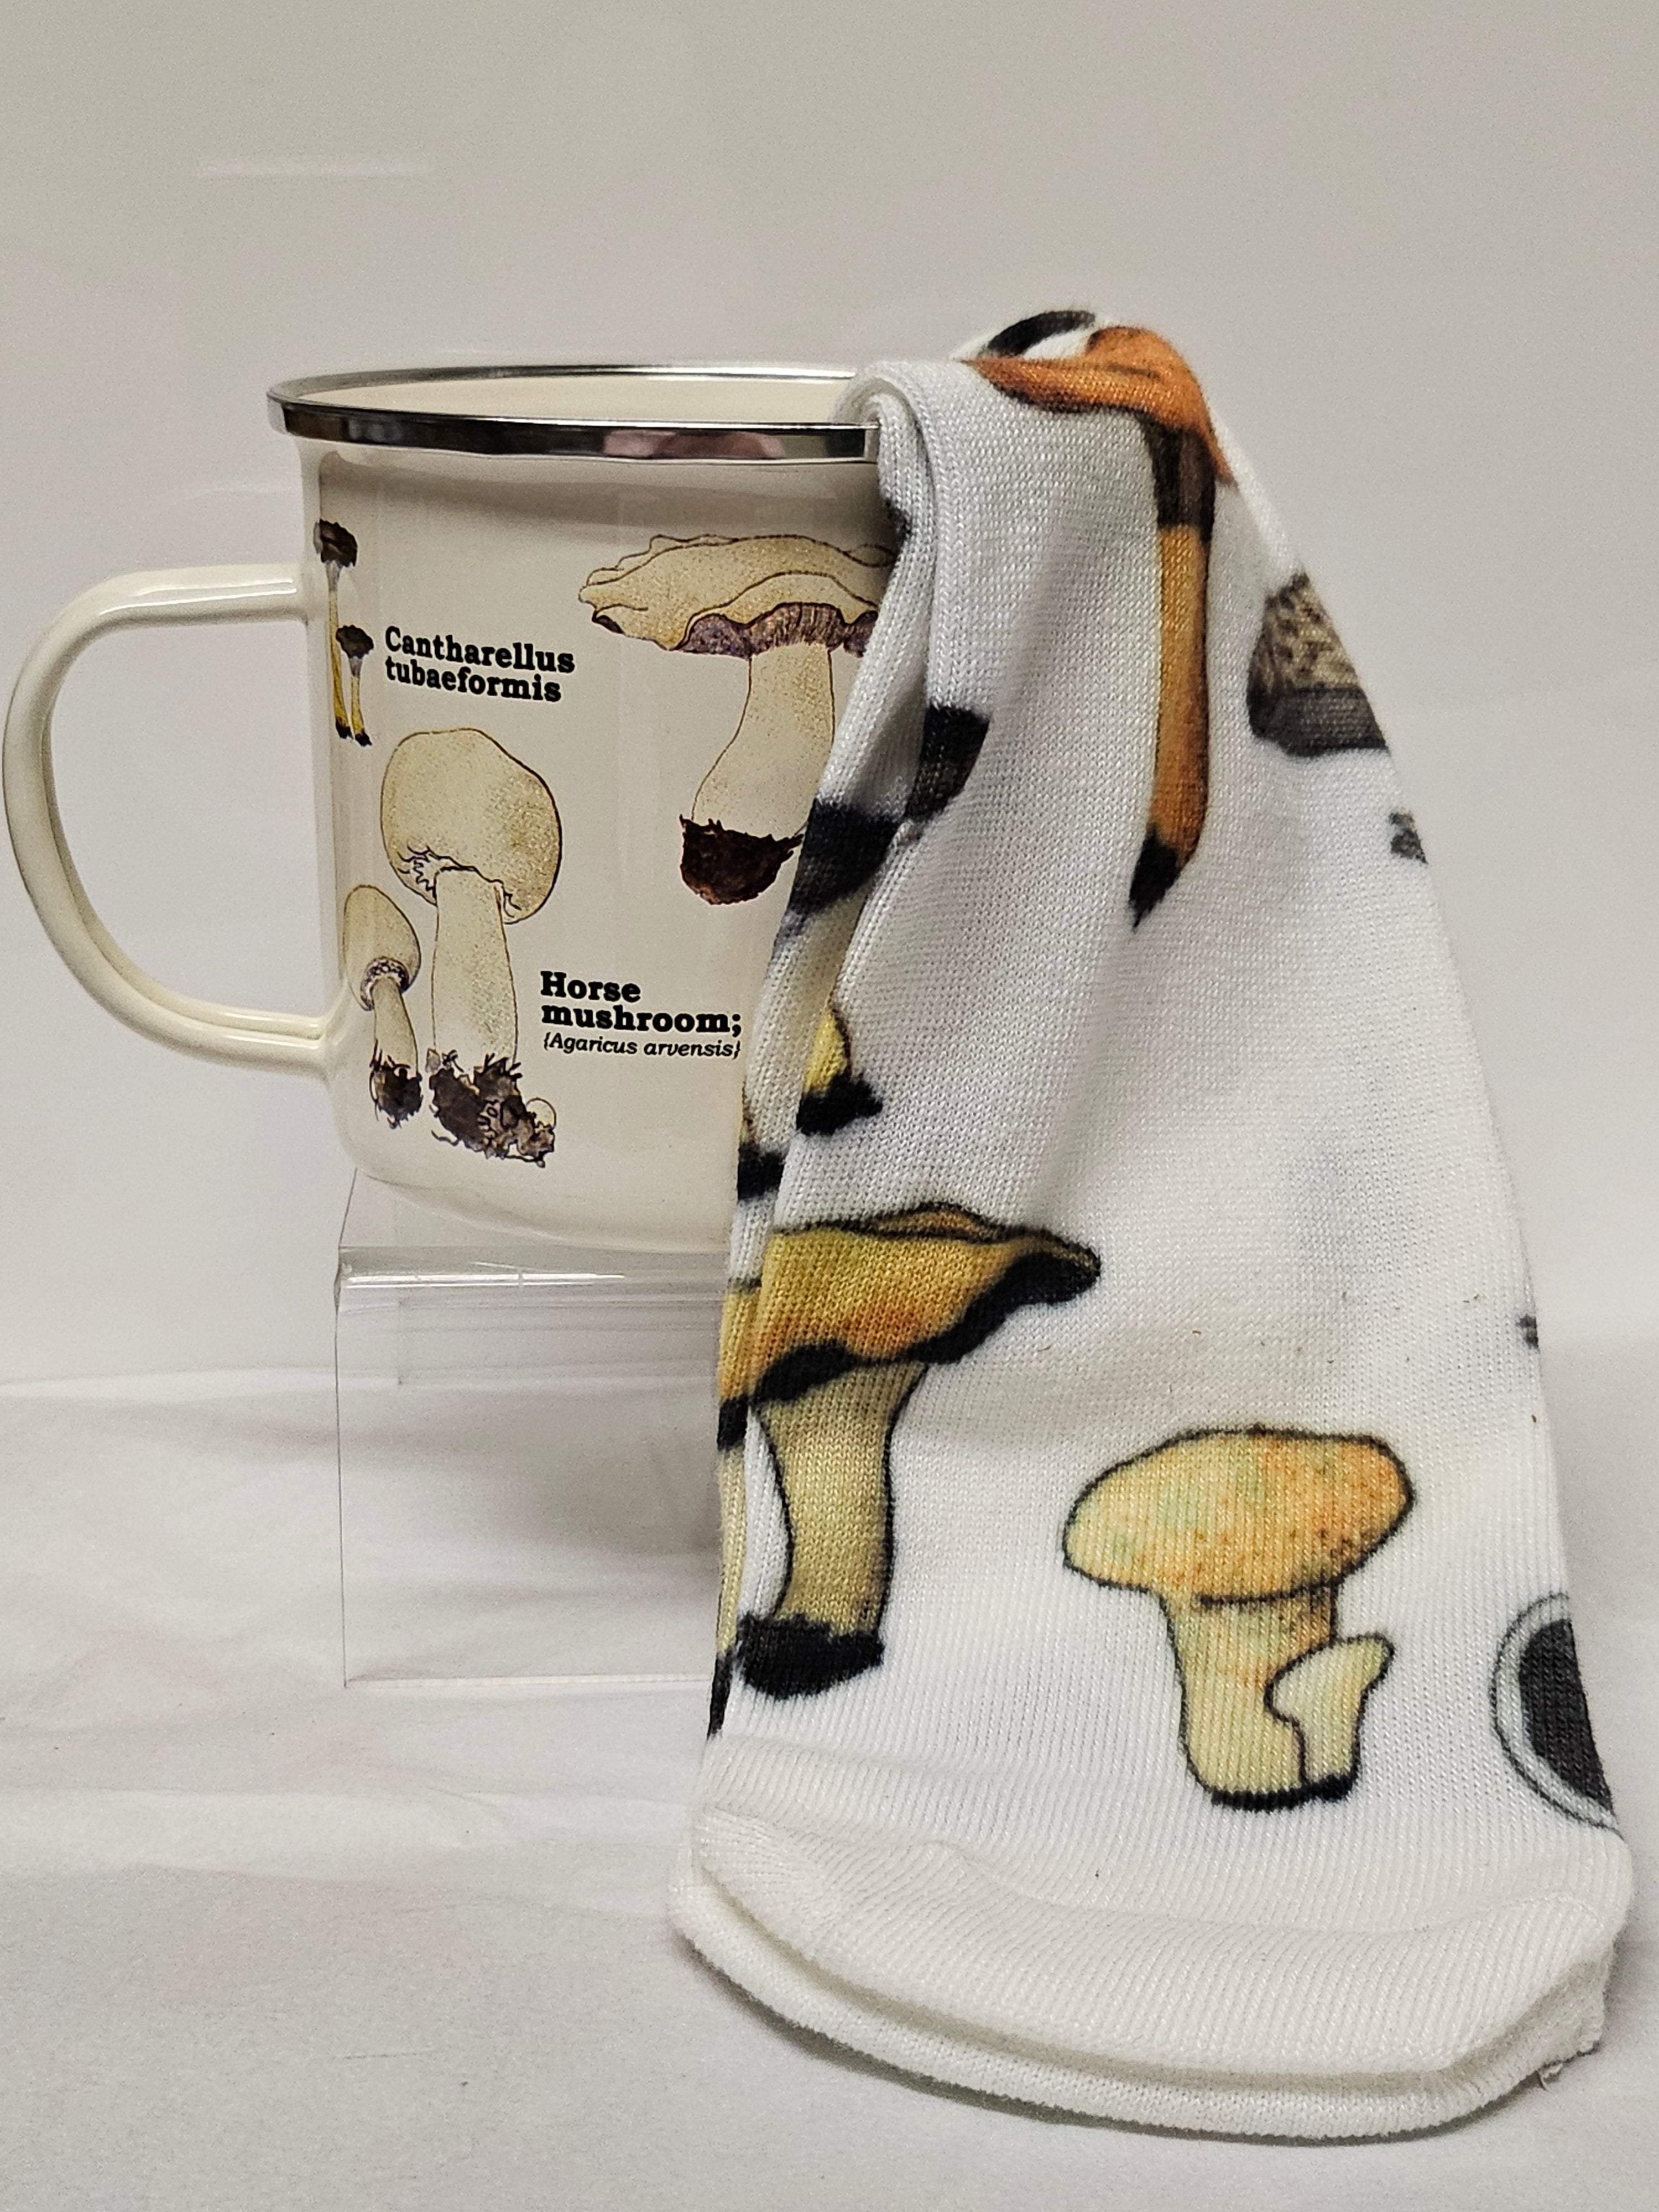 Enamel Mug and Socks Gift Set - Mushroom - GR270119